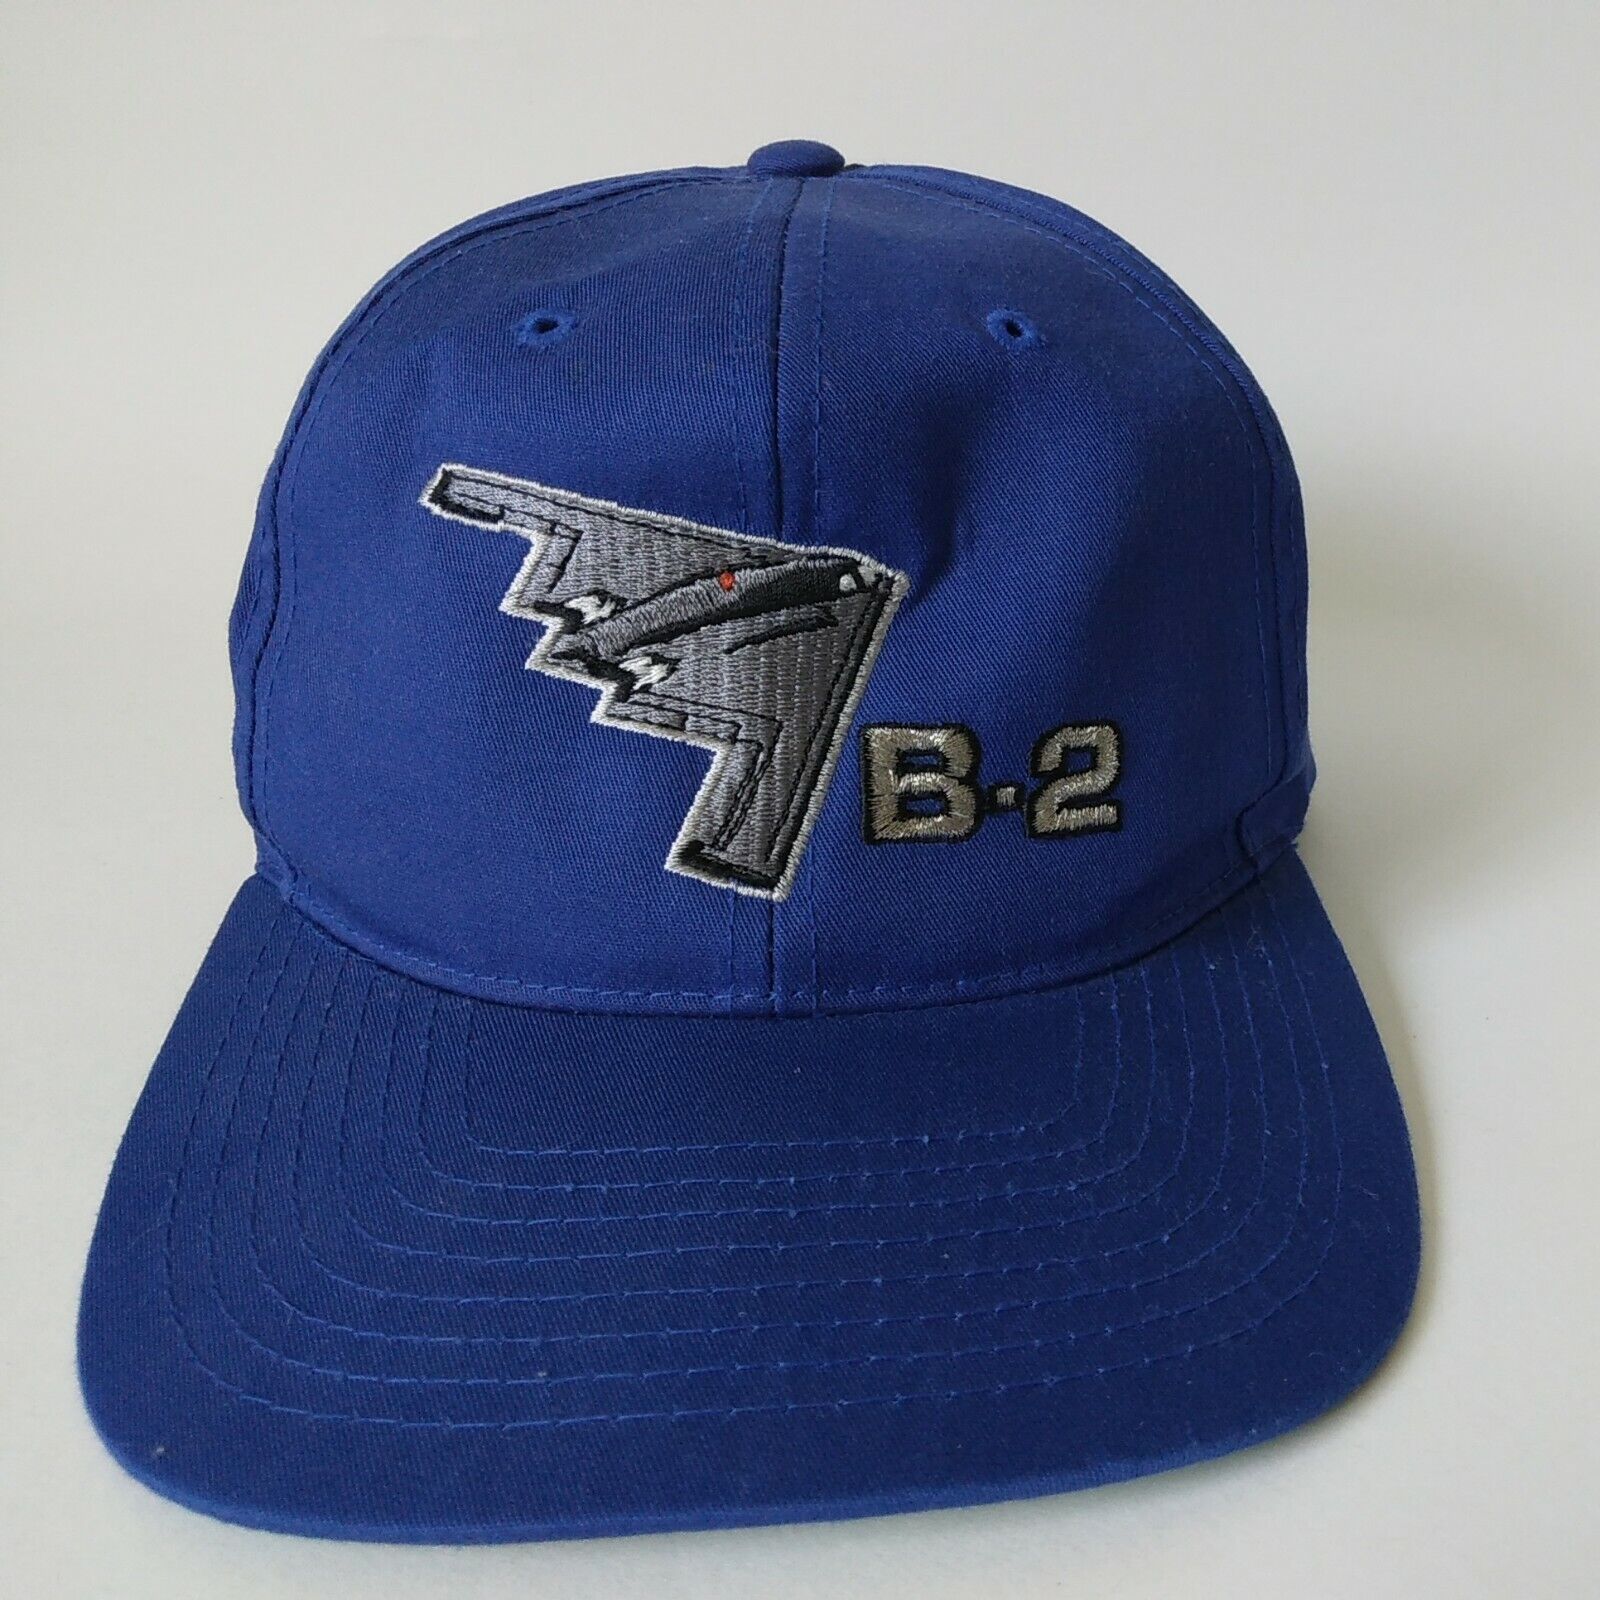 B-2 Stealth Bomber Baseball Cap/Hat Adjustable Snapback Hat Blue